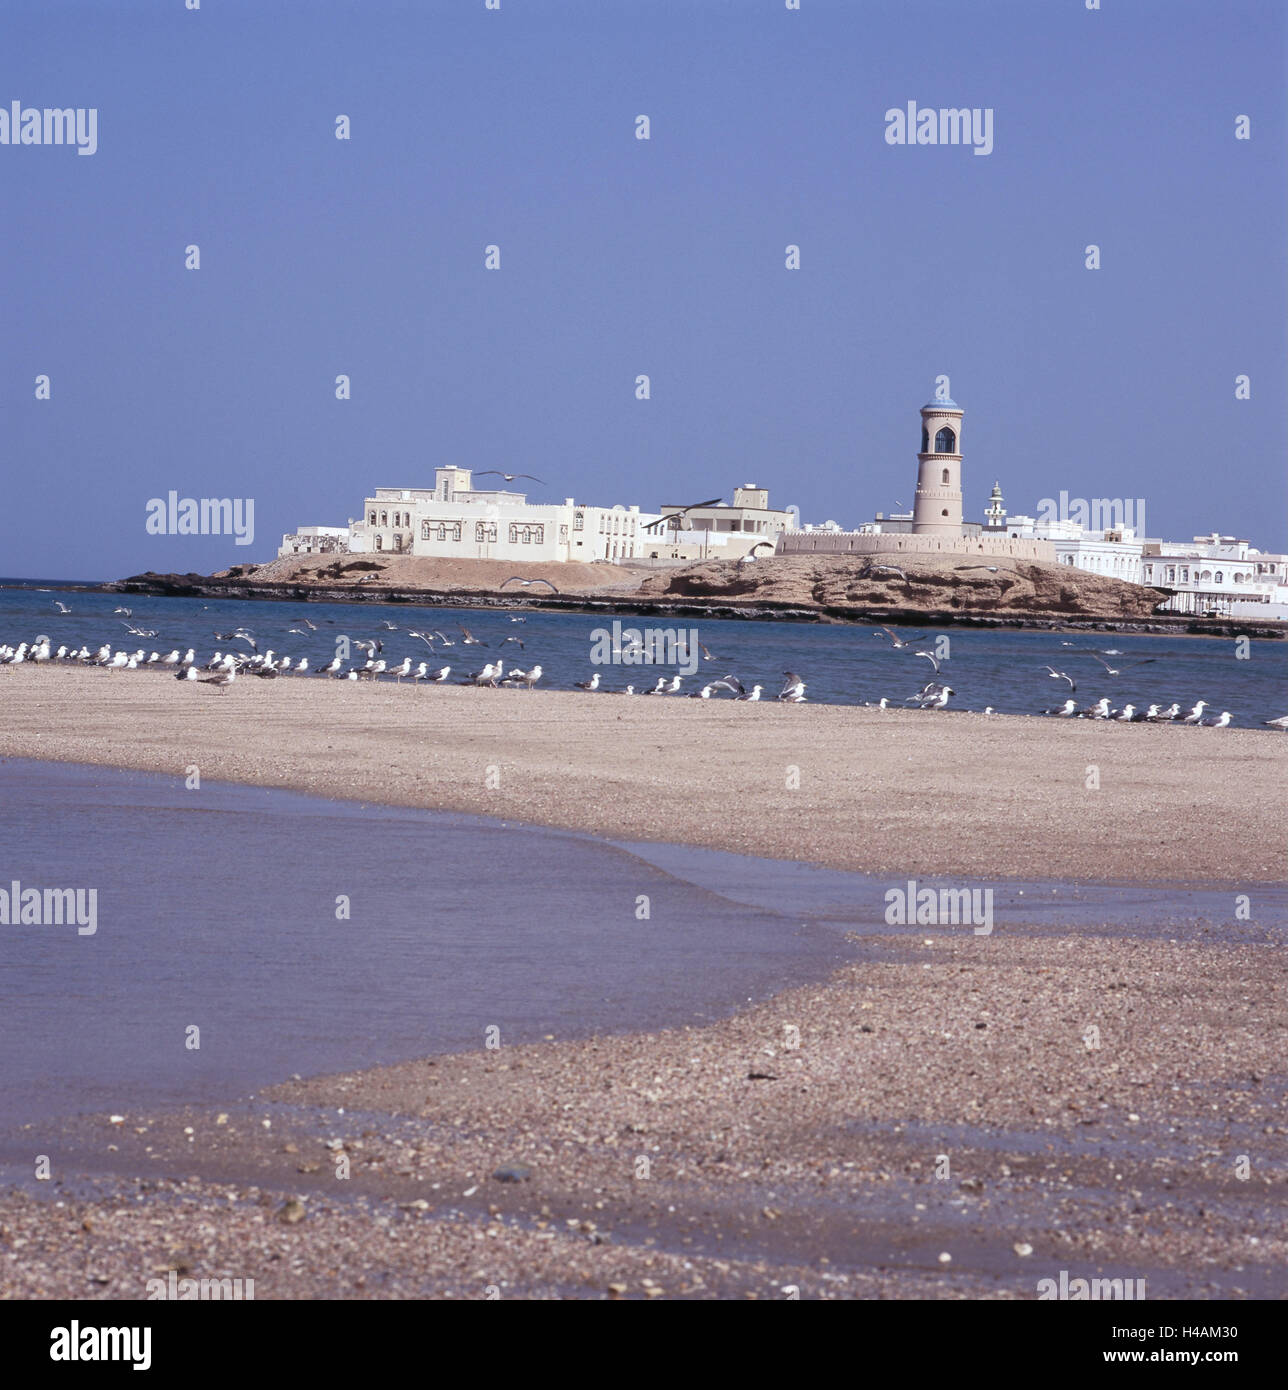 Oman, Sur, beach, gulls, lighthouse, heaven, blue, birds, Laridae, beacons, buildings, orientation, sea, waters, Stock Photo